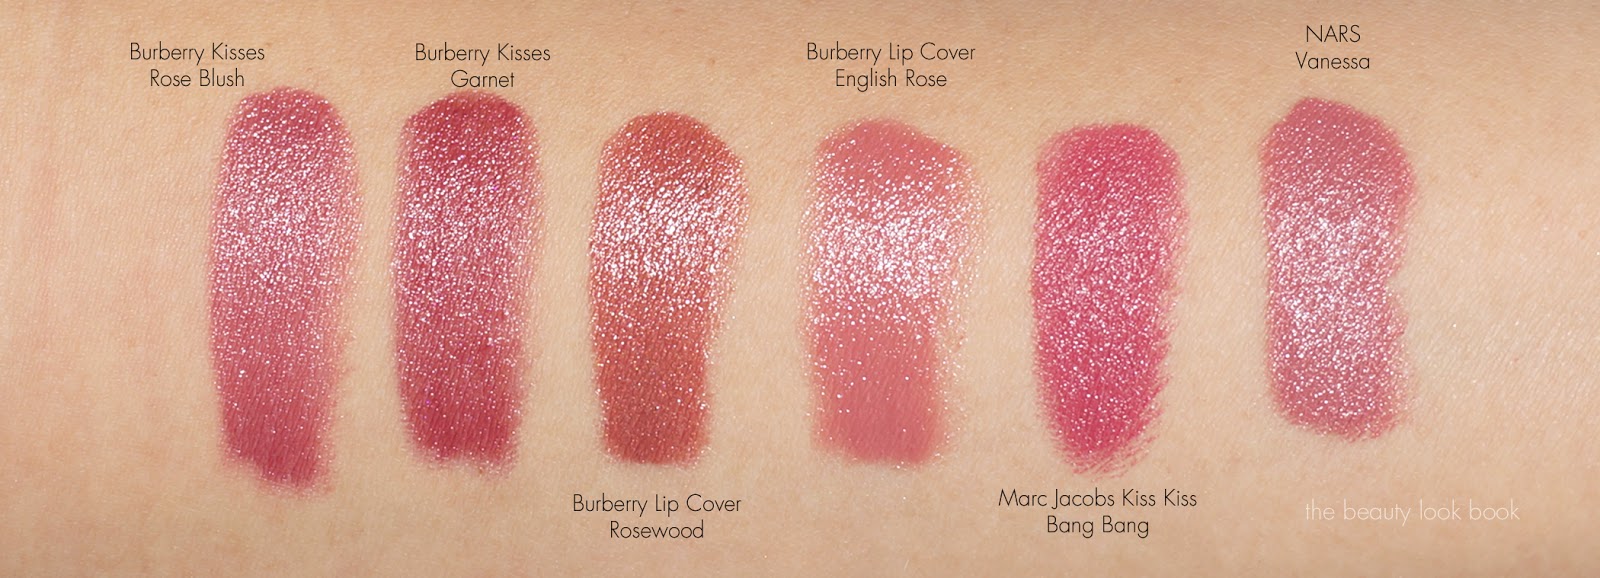 burberry rose blush lip gloss